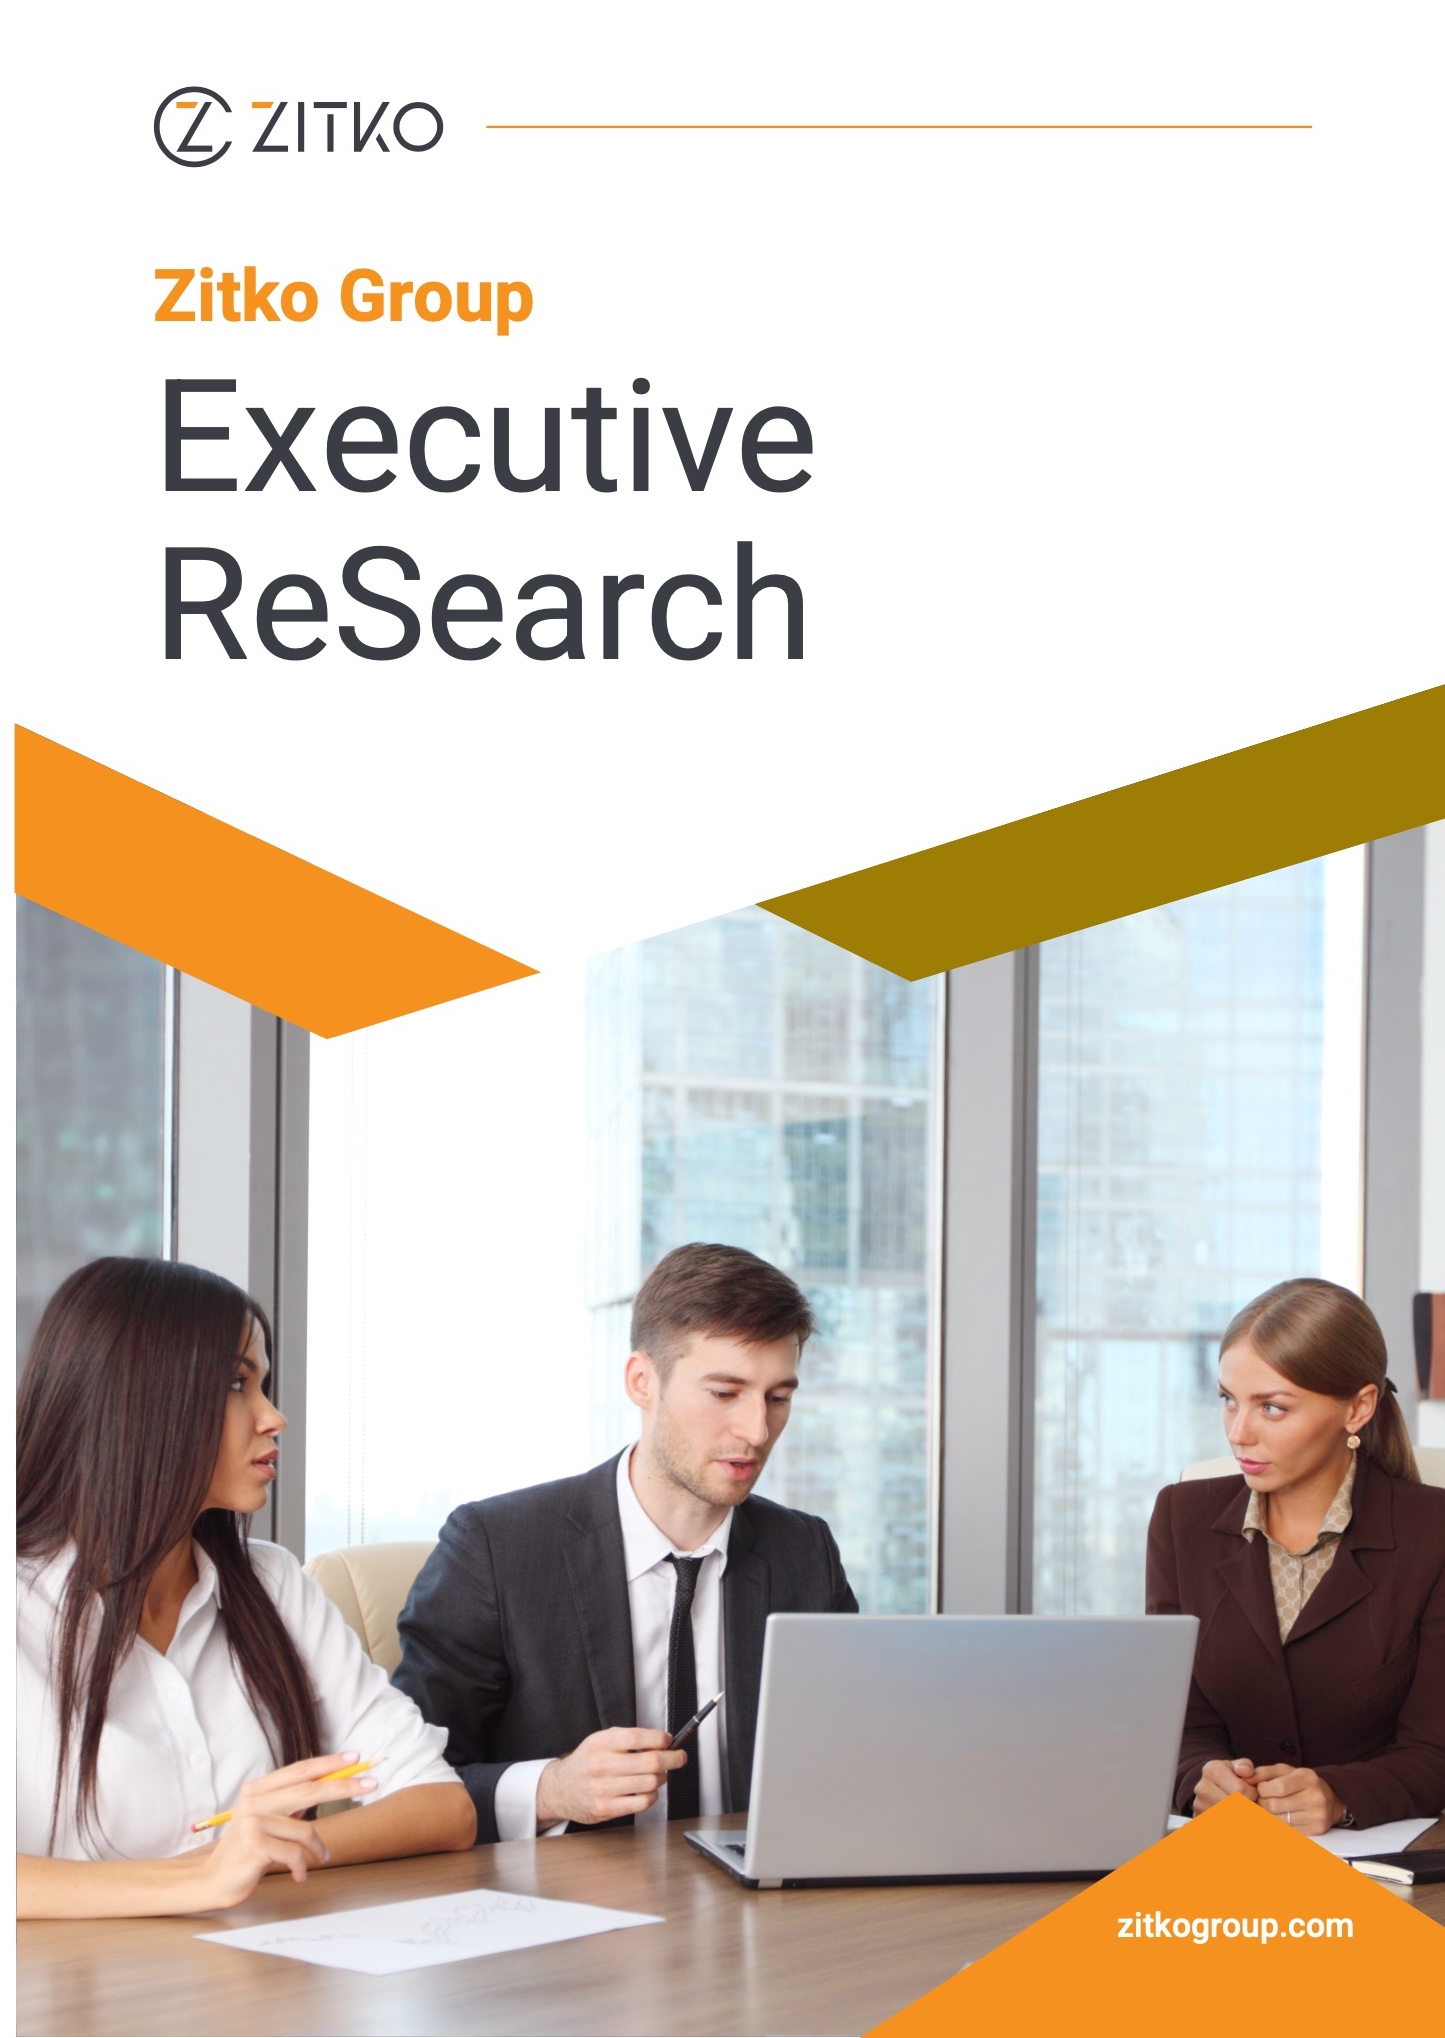 Executive ReSearch